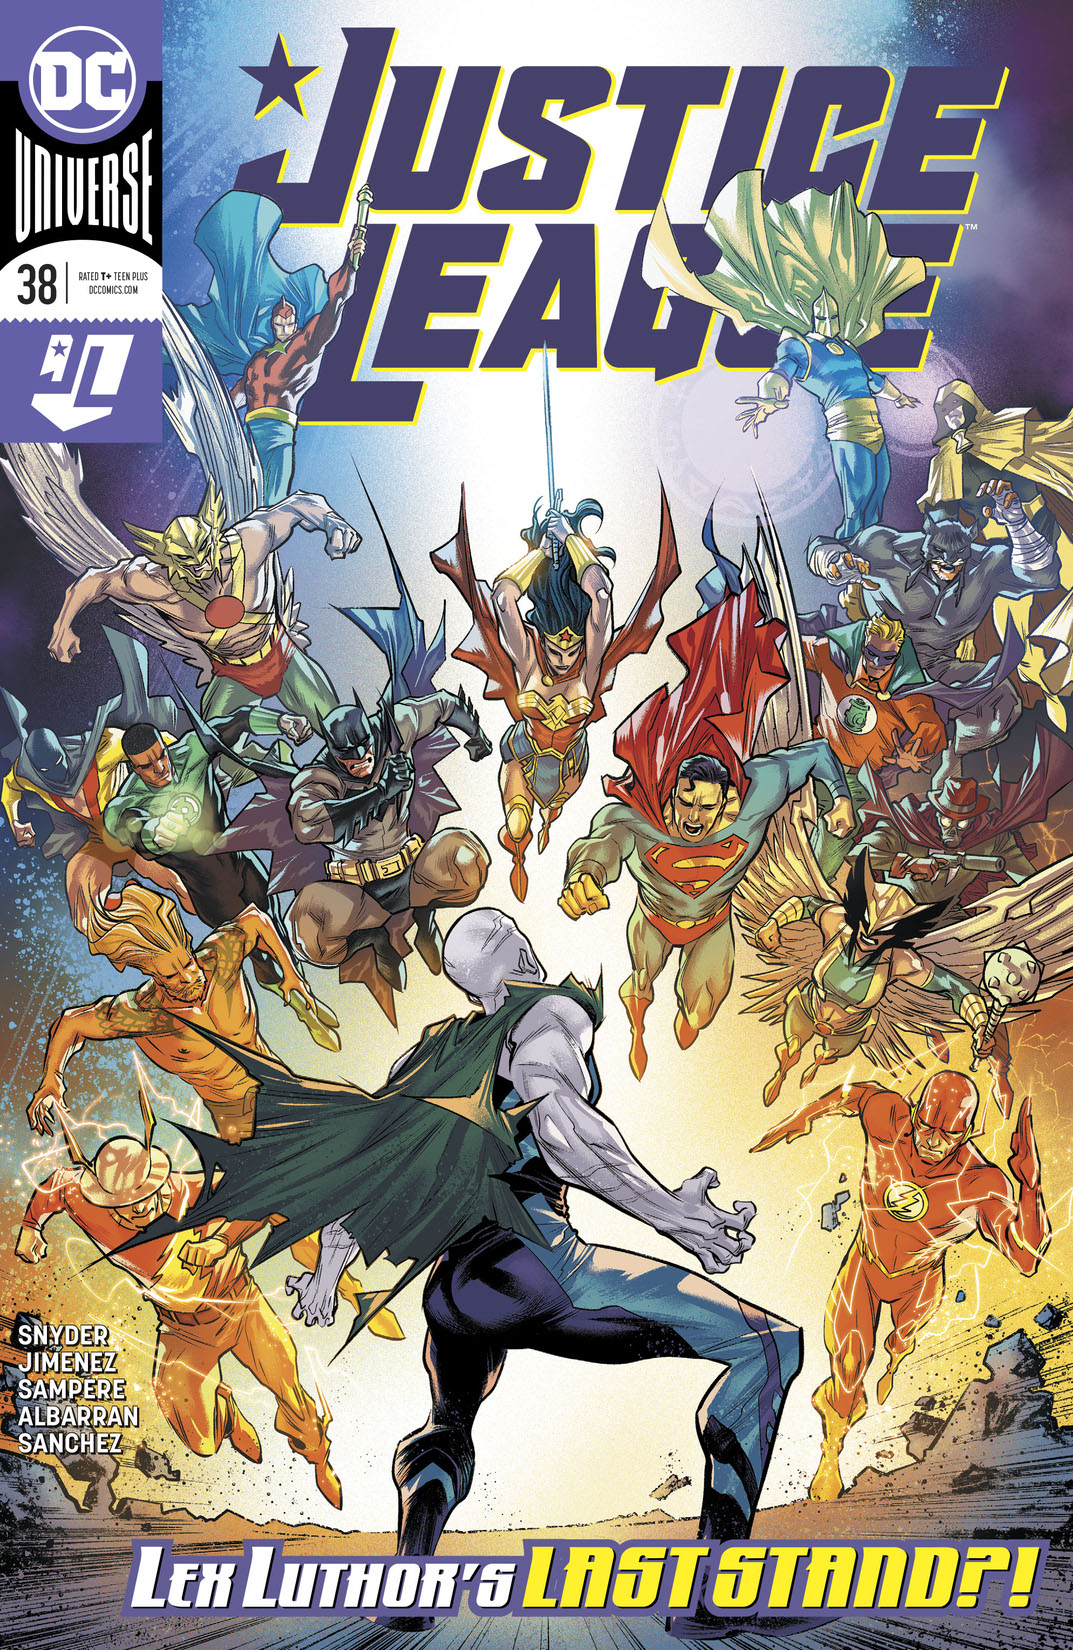 Justice League (2018-) #38 preview images